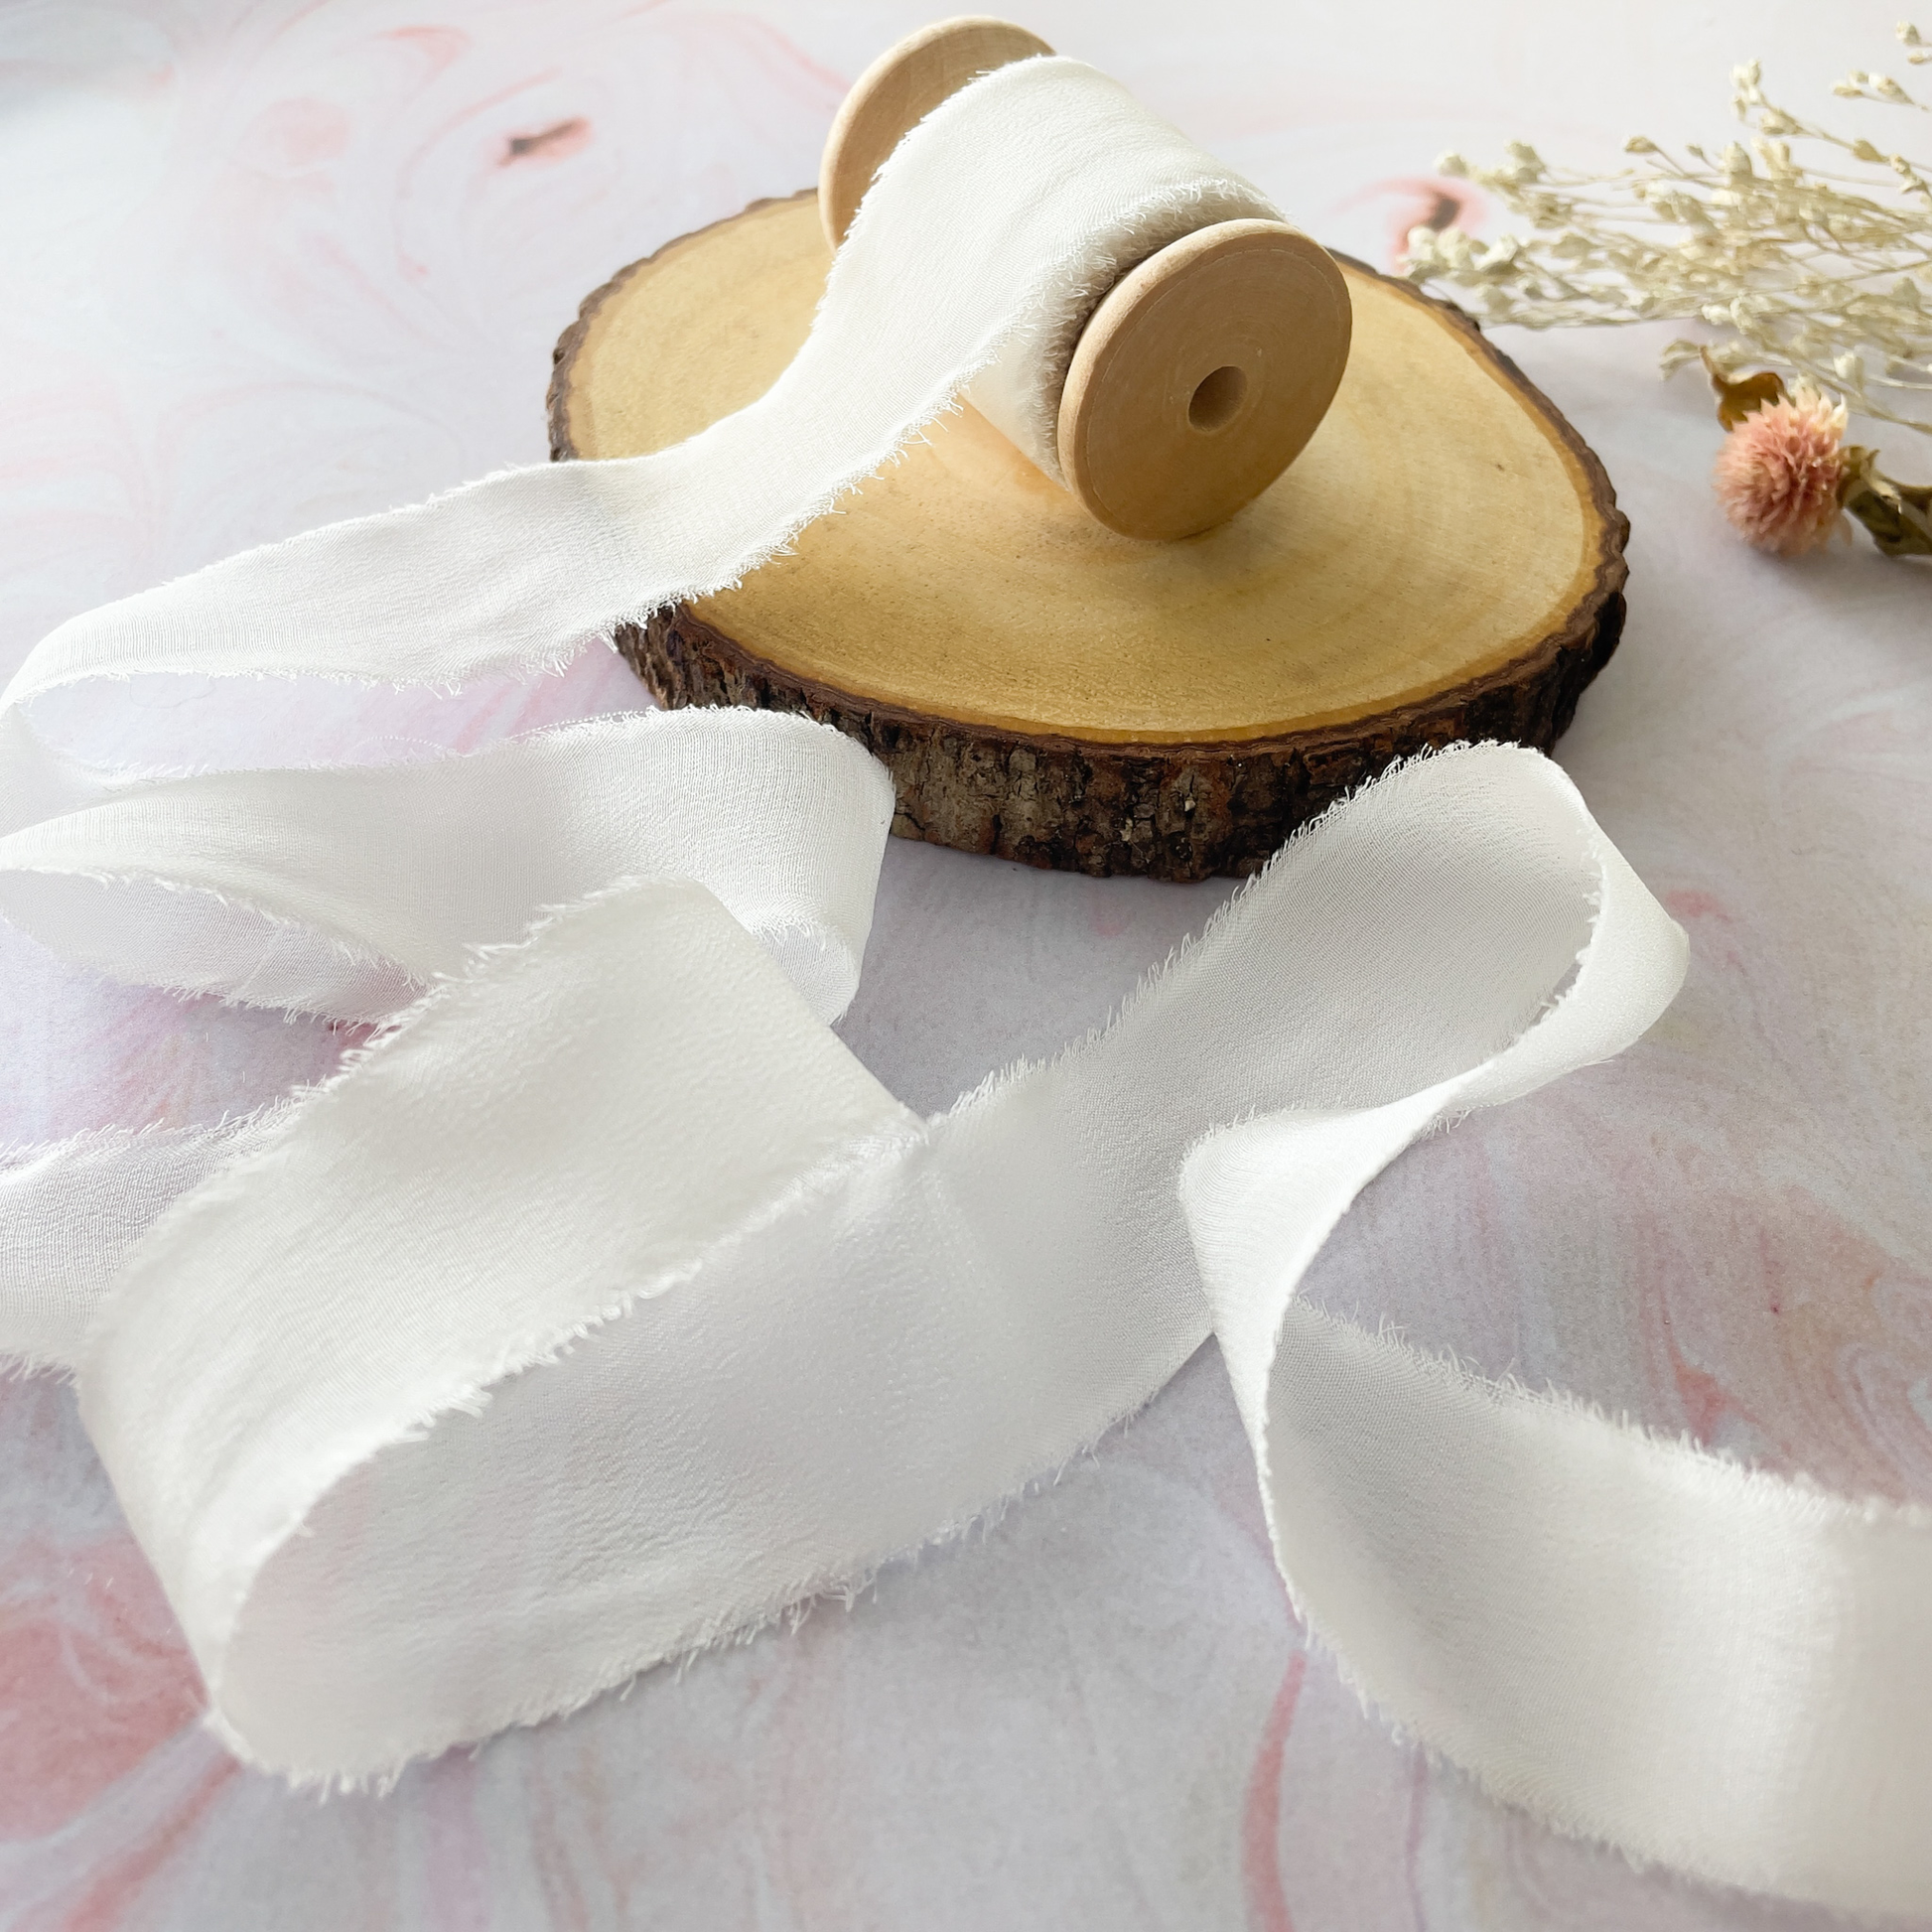 Silk Ribbon in White Art & Crafting Materials thenaturalpapercompany   